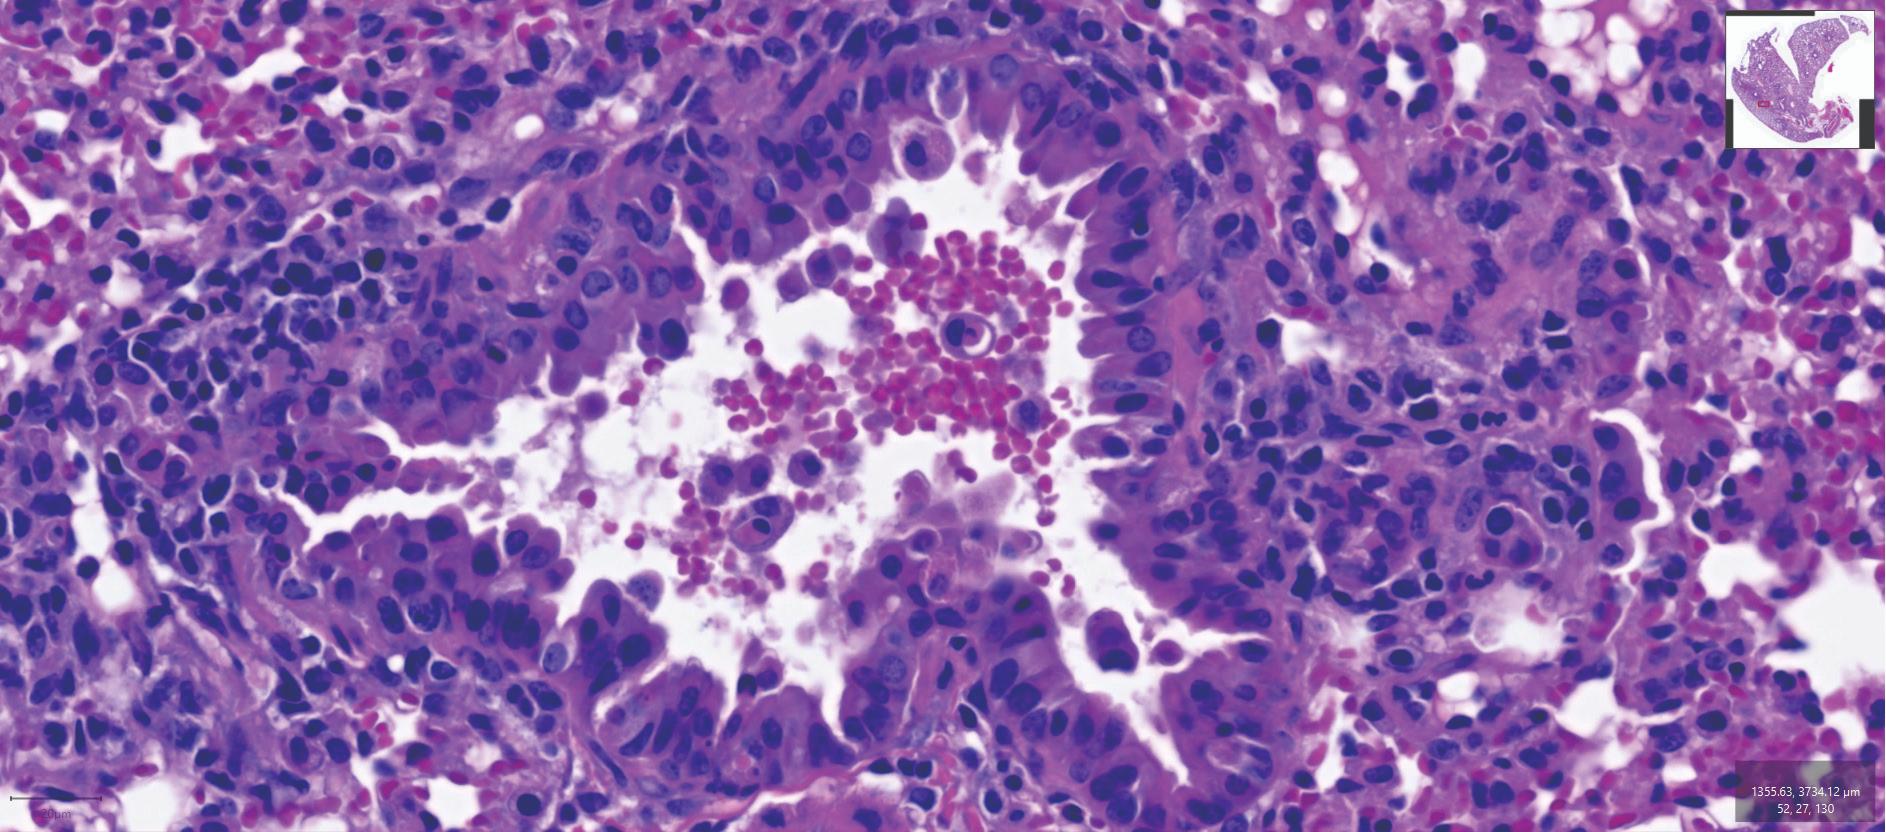 Lung Bronchiole Phagocytosis